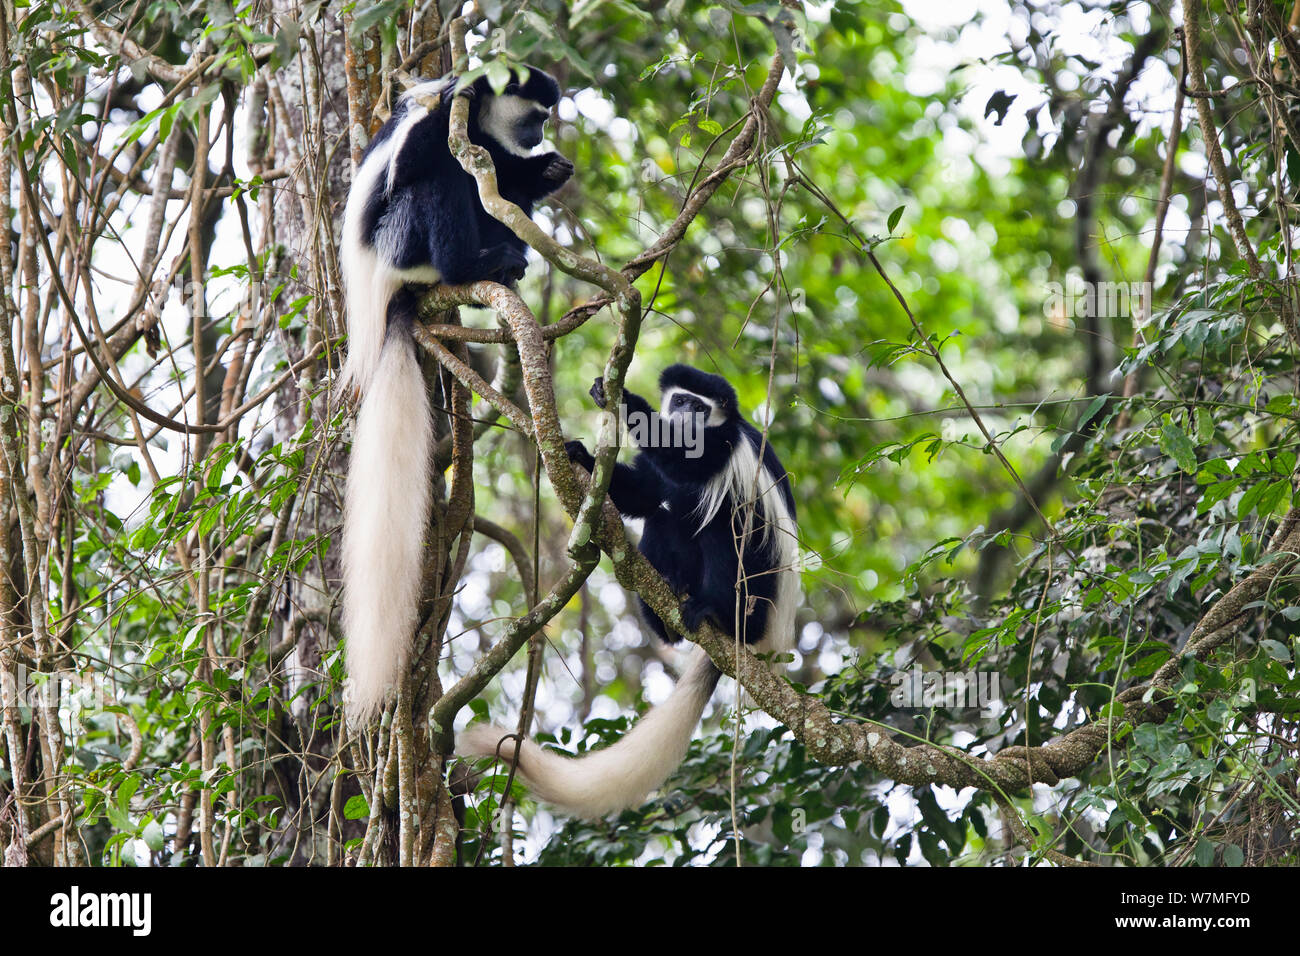 Black and White Colobus monkeys (Colobus guereza) Arusha National Park, Tanzania, East Africa Stock Photo